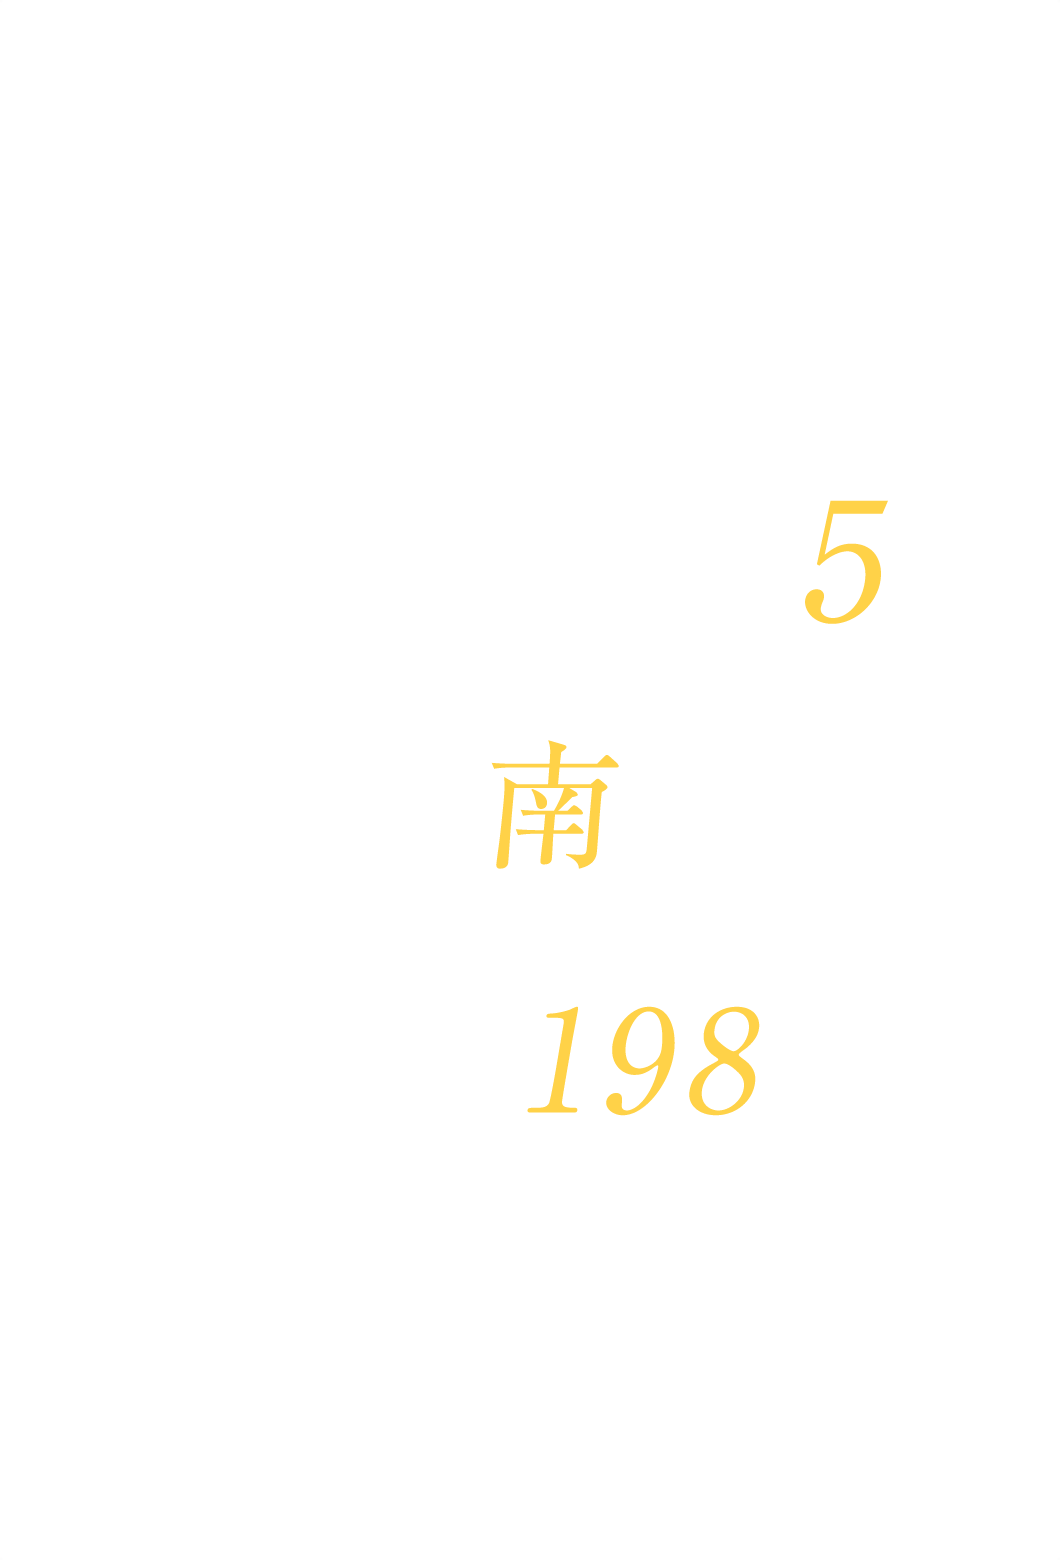 Osaka Metro ucvwk5^S˓^K198@